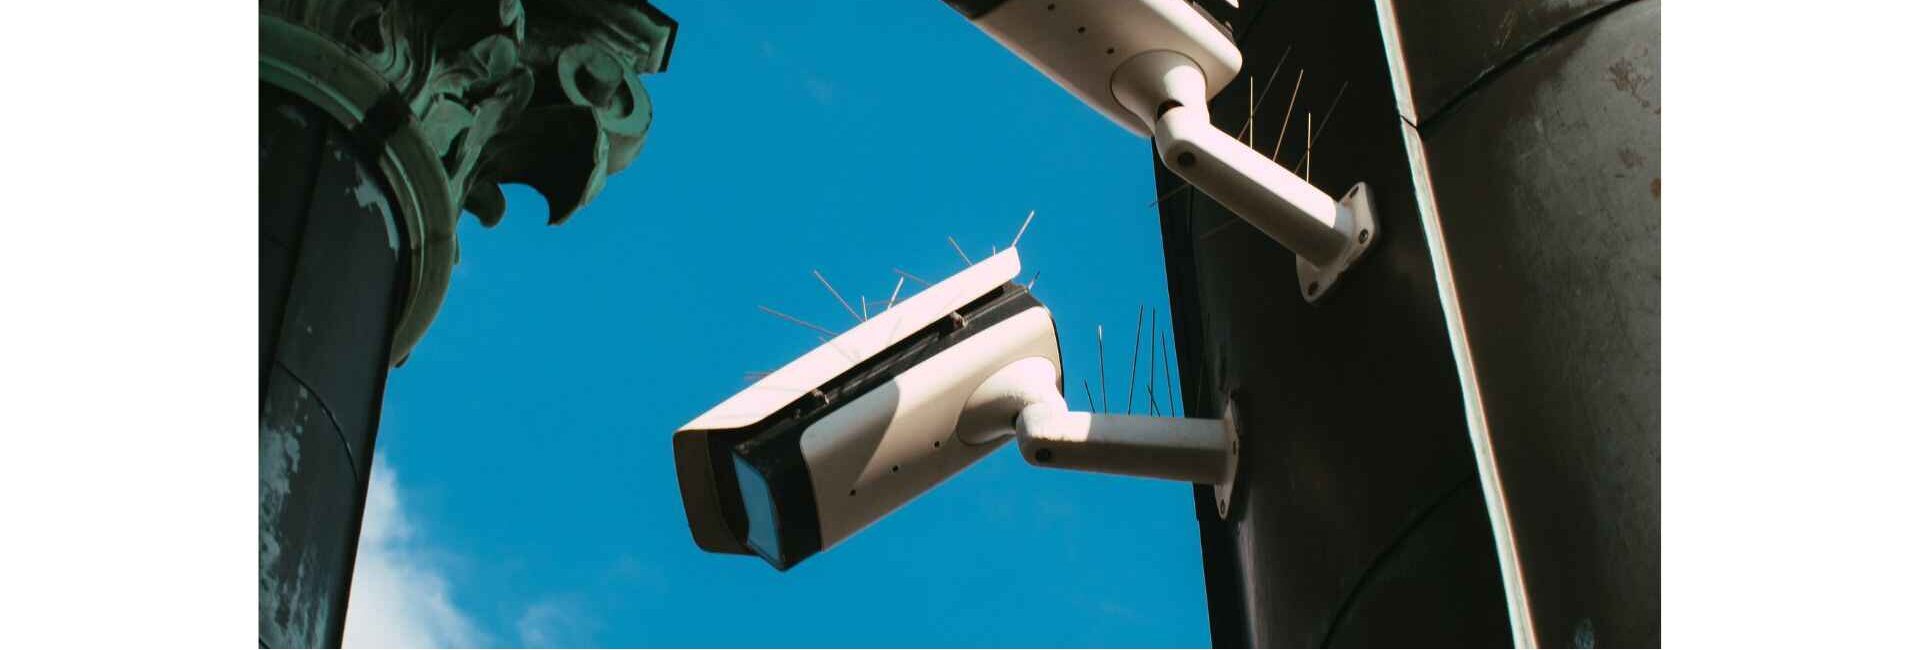 Drishti Electronics Security Systems Pvt. Ltd - CCTV Dealer in Noida